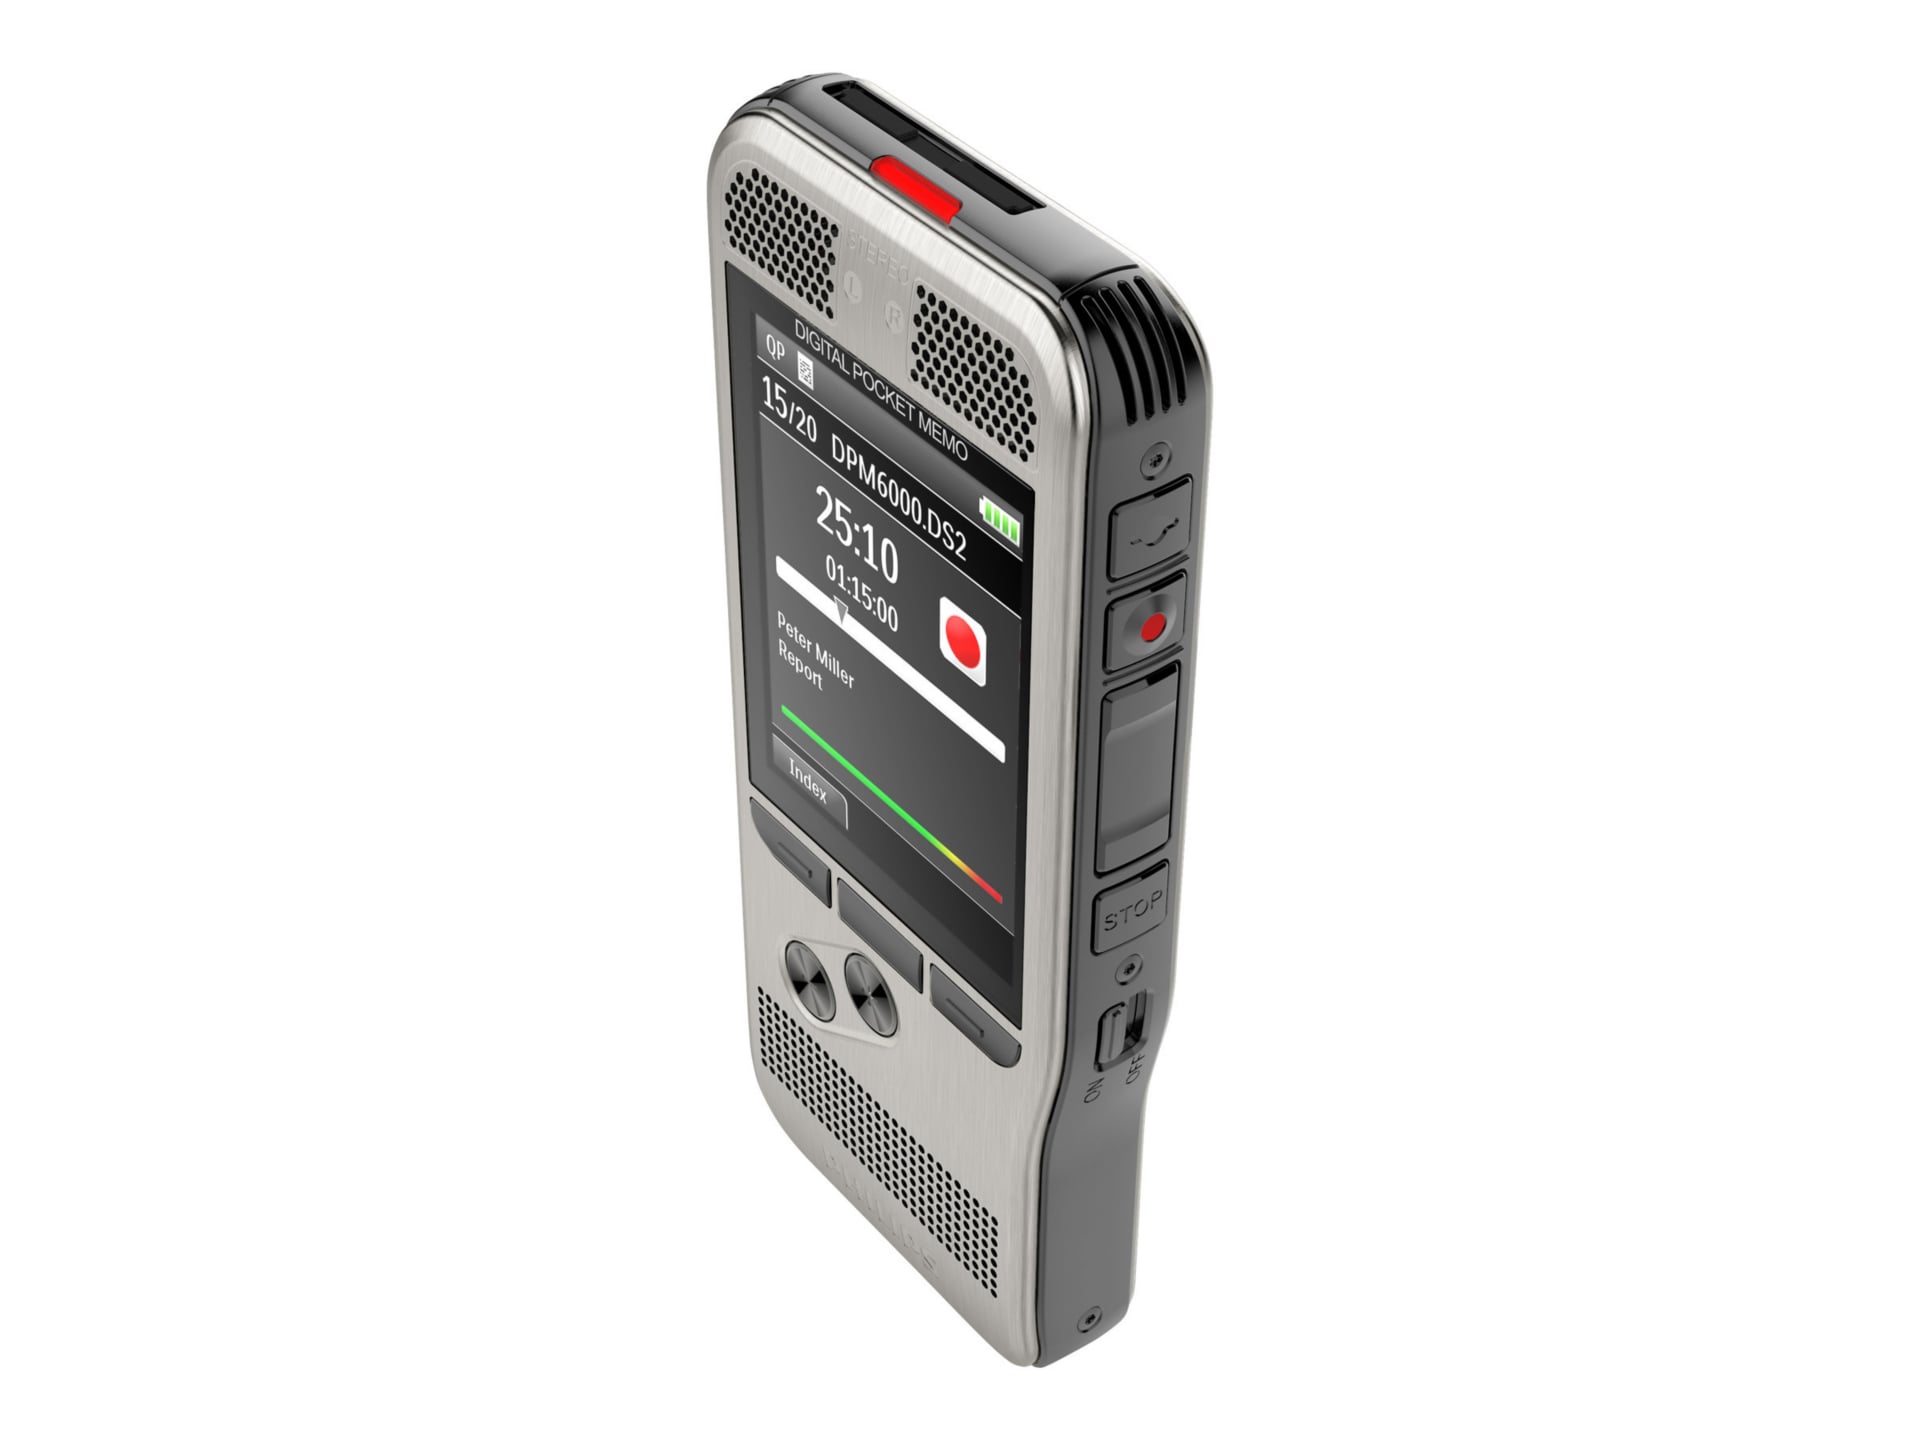 Philips Pocket Memo DPM6700 - voice recorder